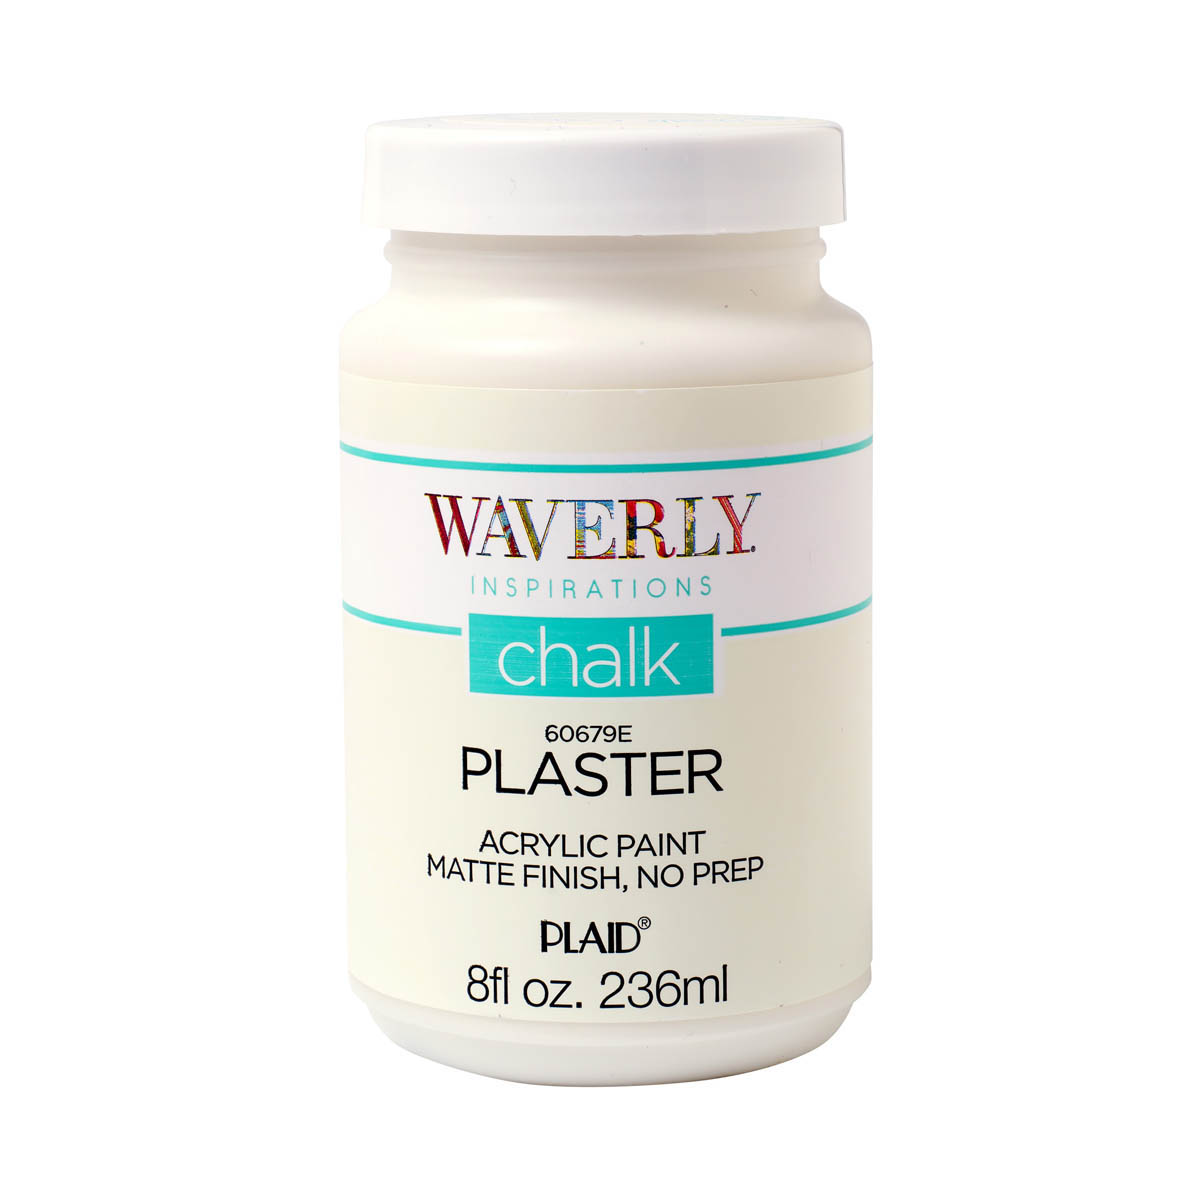 Waverly ® Inspirations Chalk Acrylic Paint - Plaster, 8 oz. - 60679E